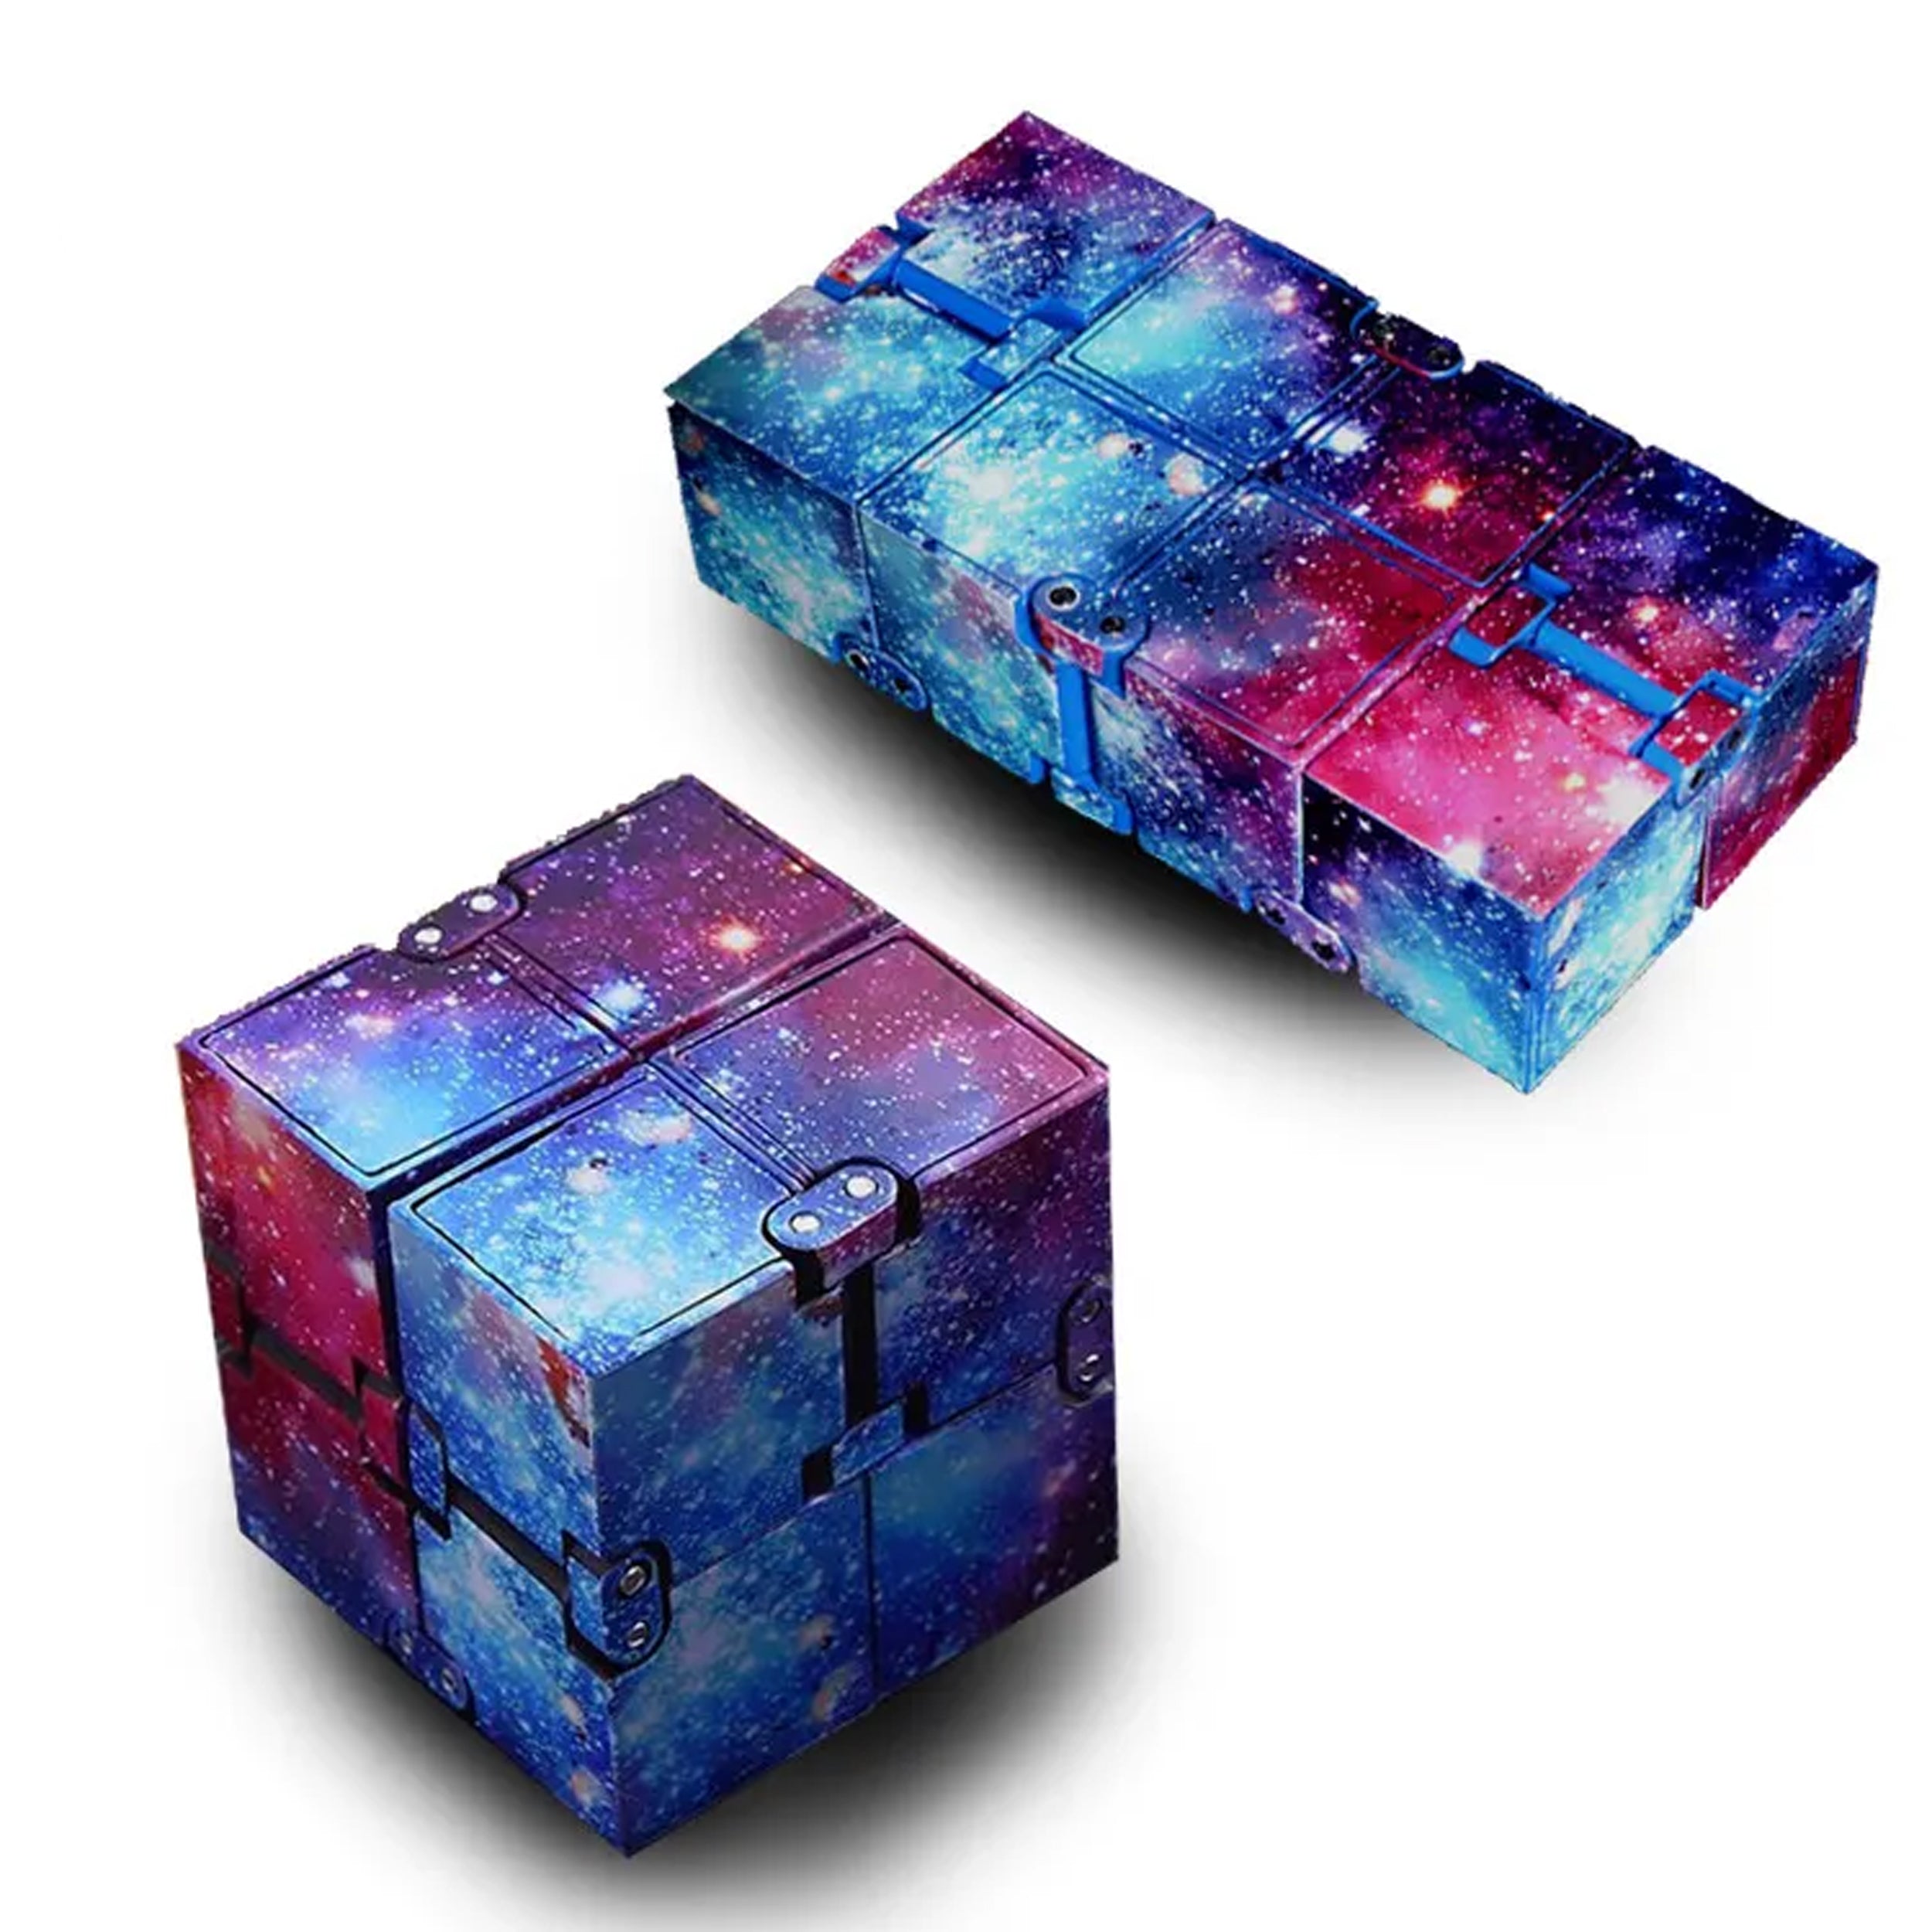 3D Galaxy Cube Infinity Fidget Toy